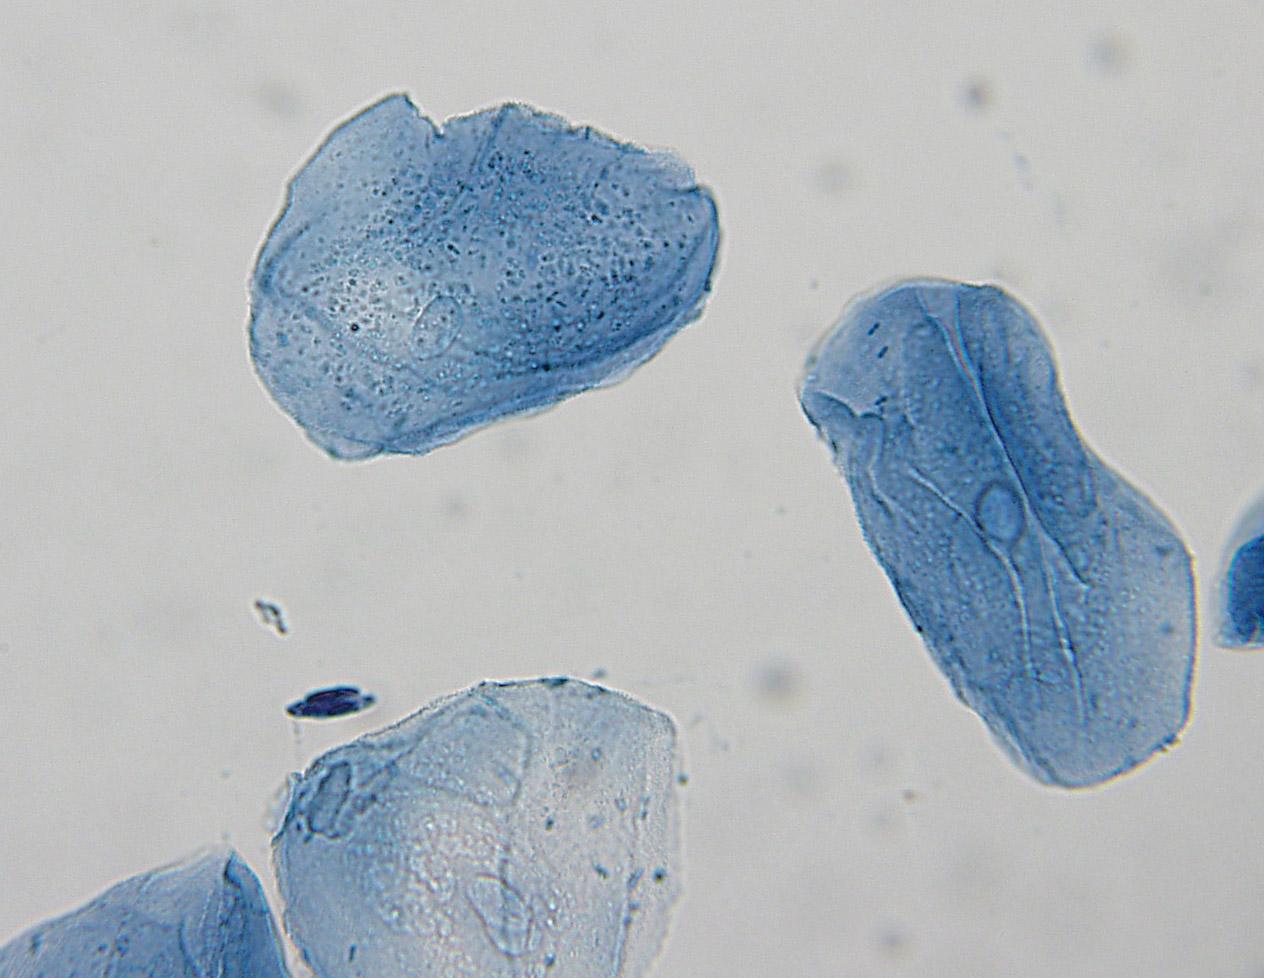 cheek cells under a microscope